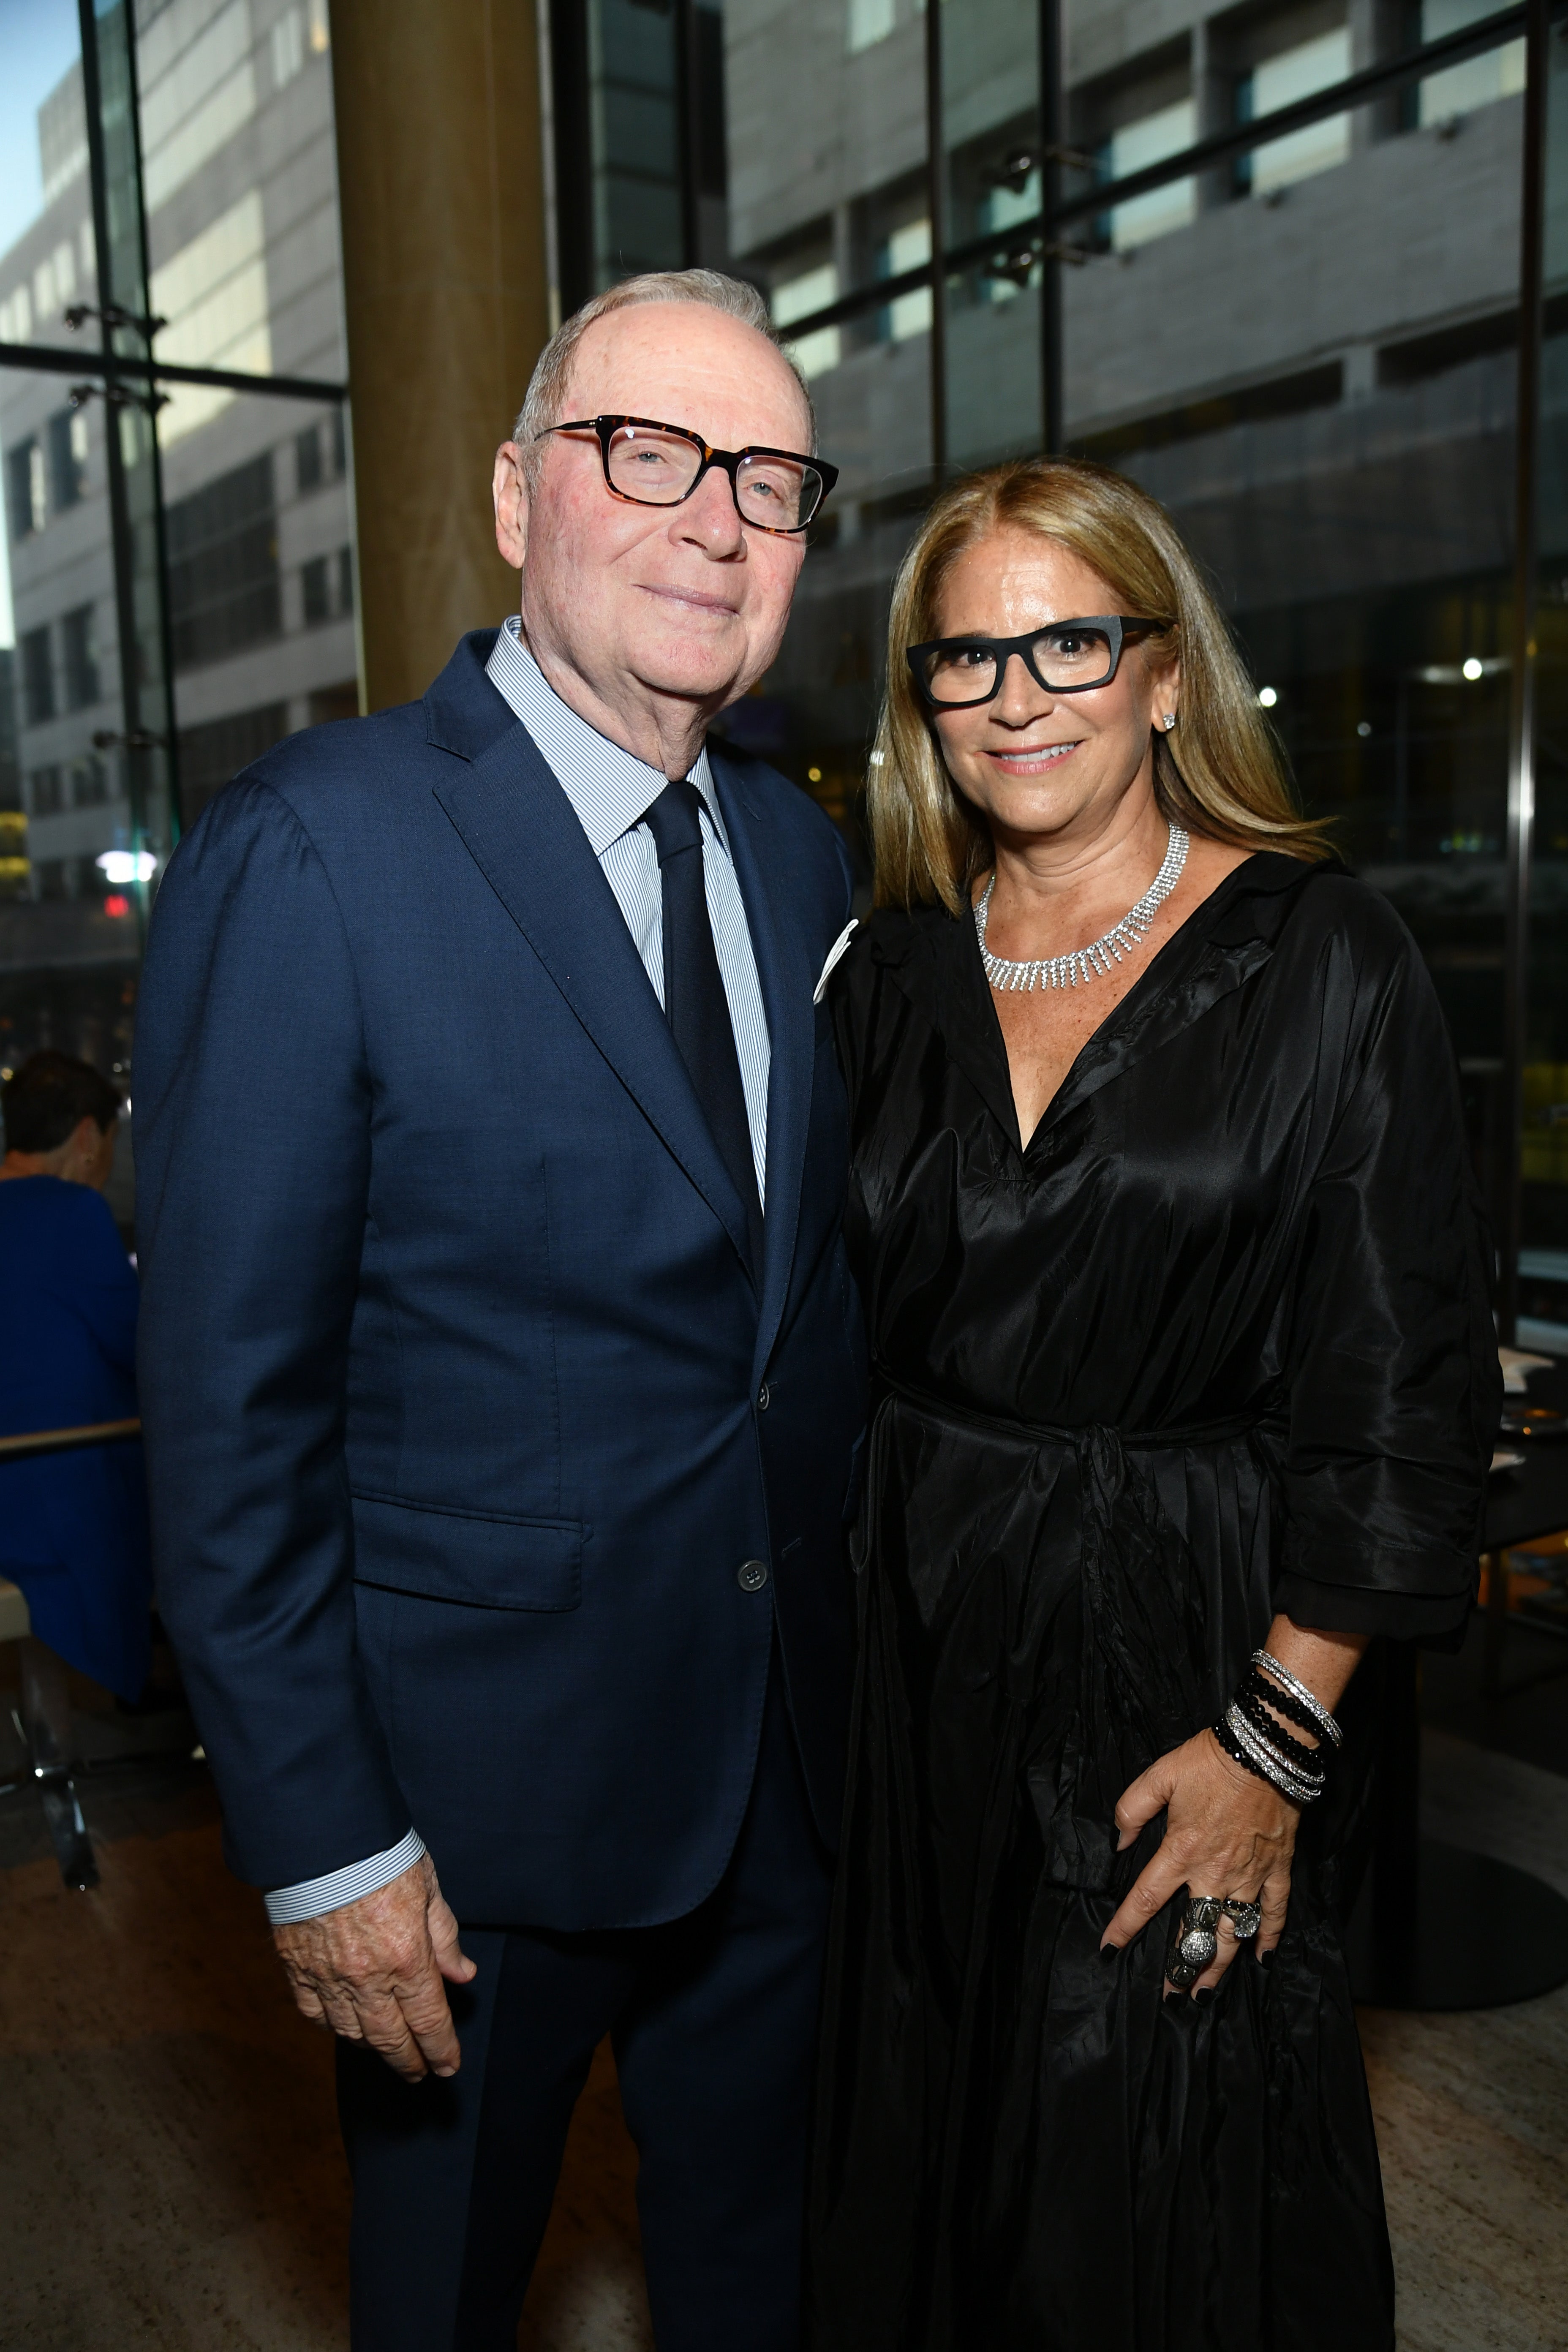 Thomas Lee (L) and Ann Tenenbaum attend the 57th New York Film Festival - "The Irishman" pre-reception at Lincoln Ristorante on September 27, 2019 in New York City